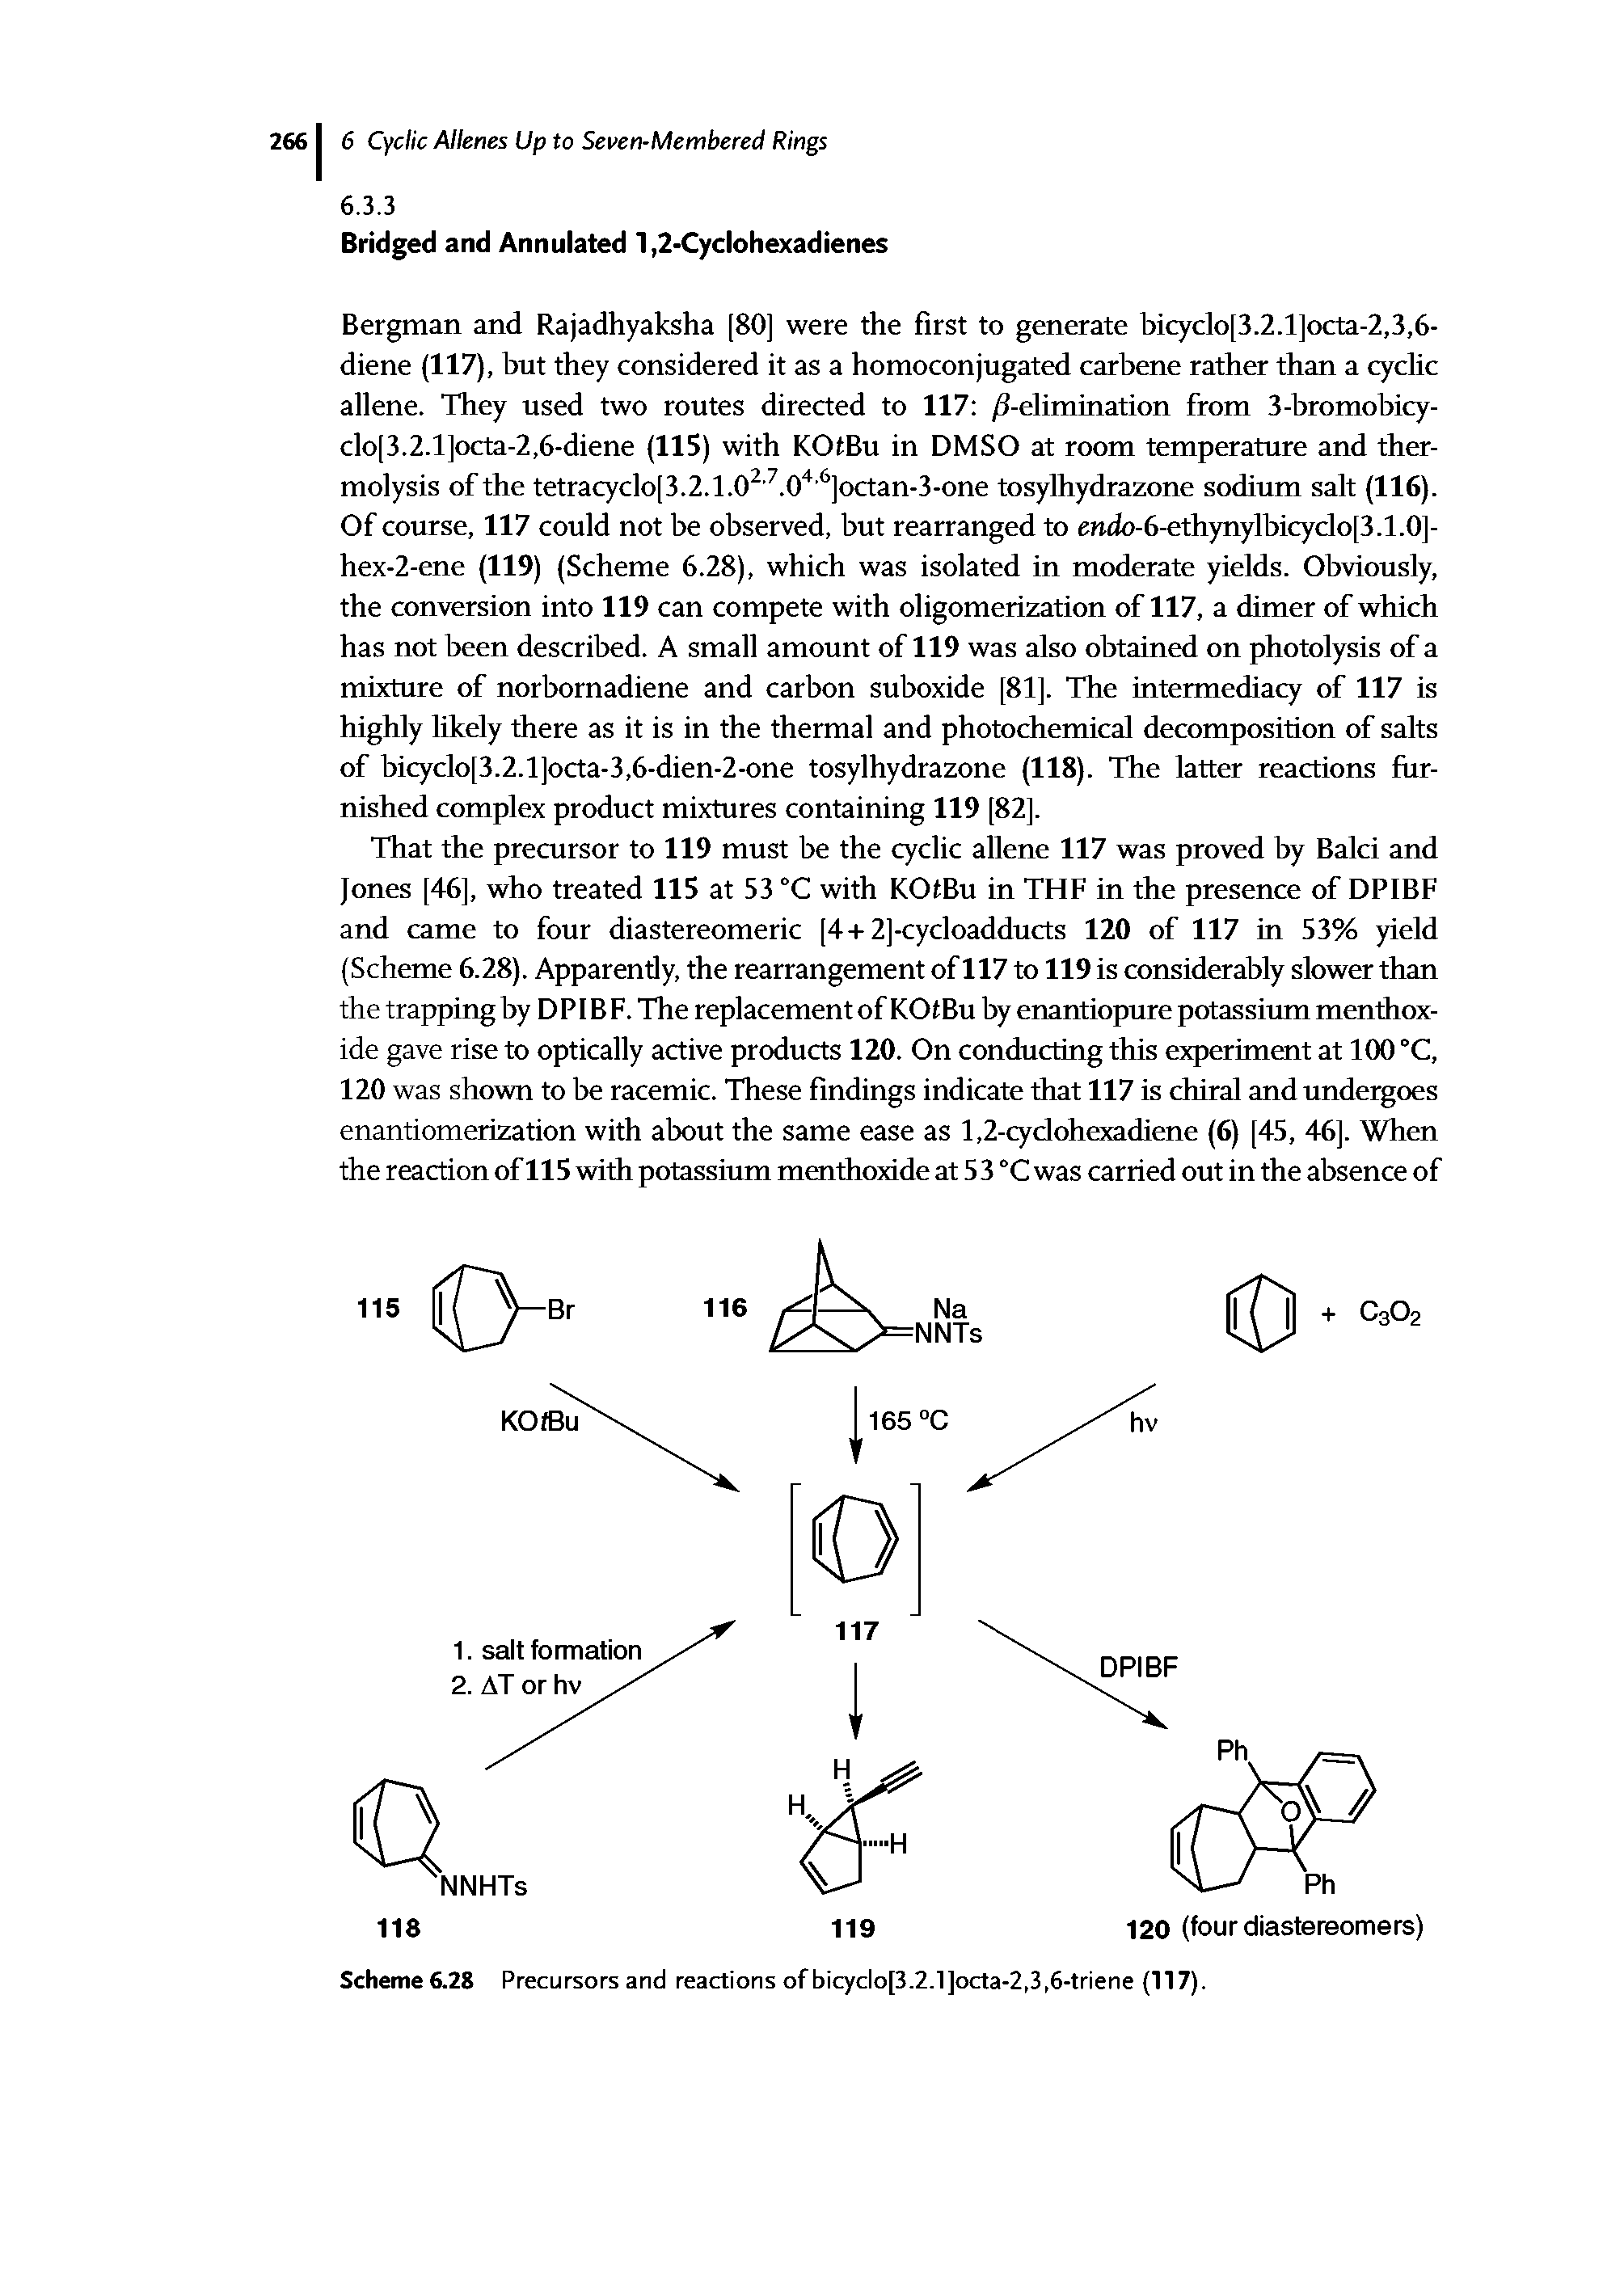 Scheme 6.28 Precursors and reactions of bicyclo[3.2.1]octa-2,3,6-triene (117).